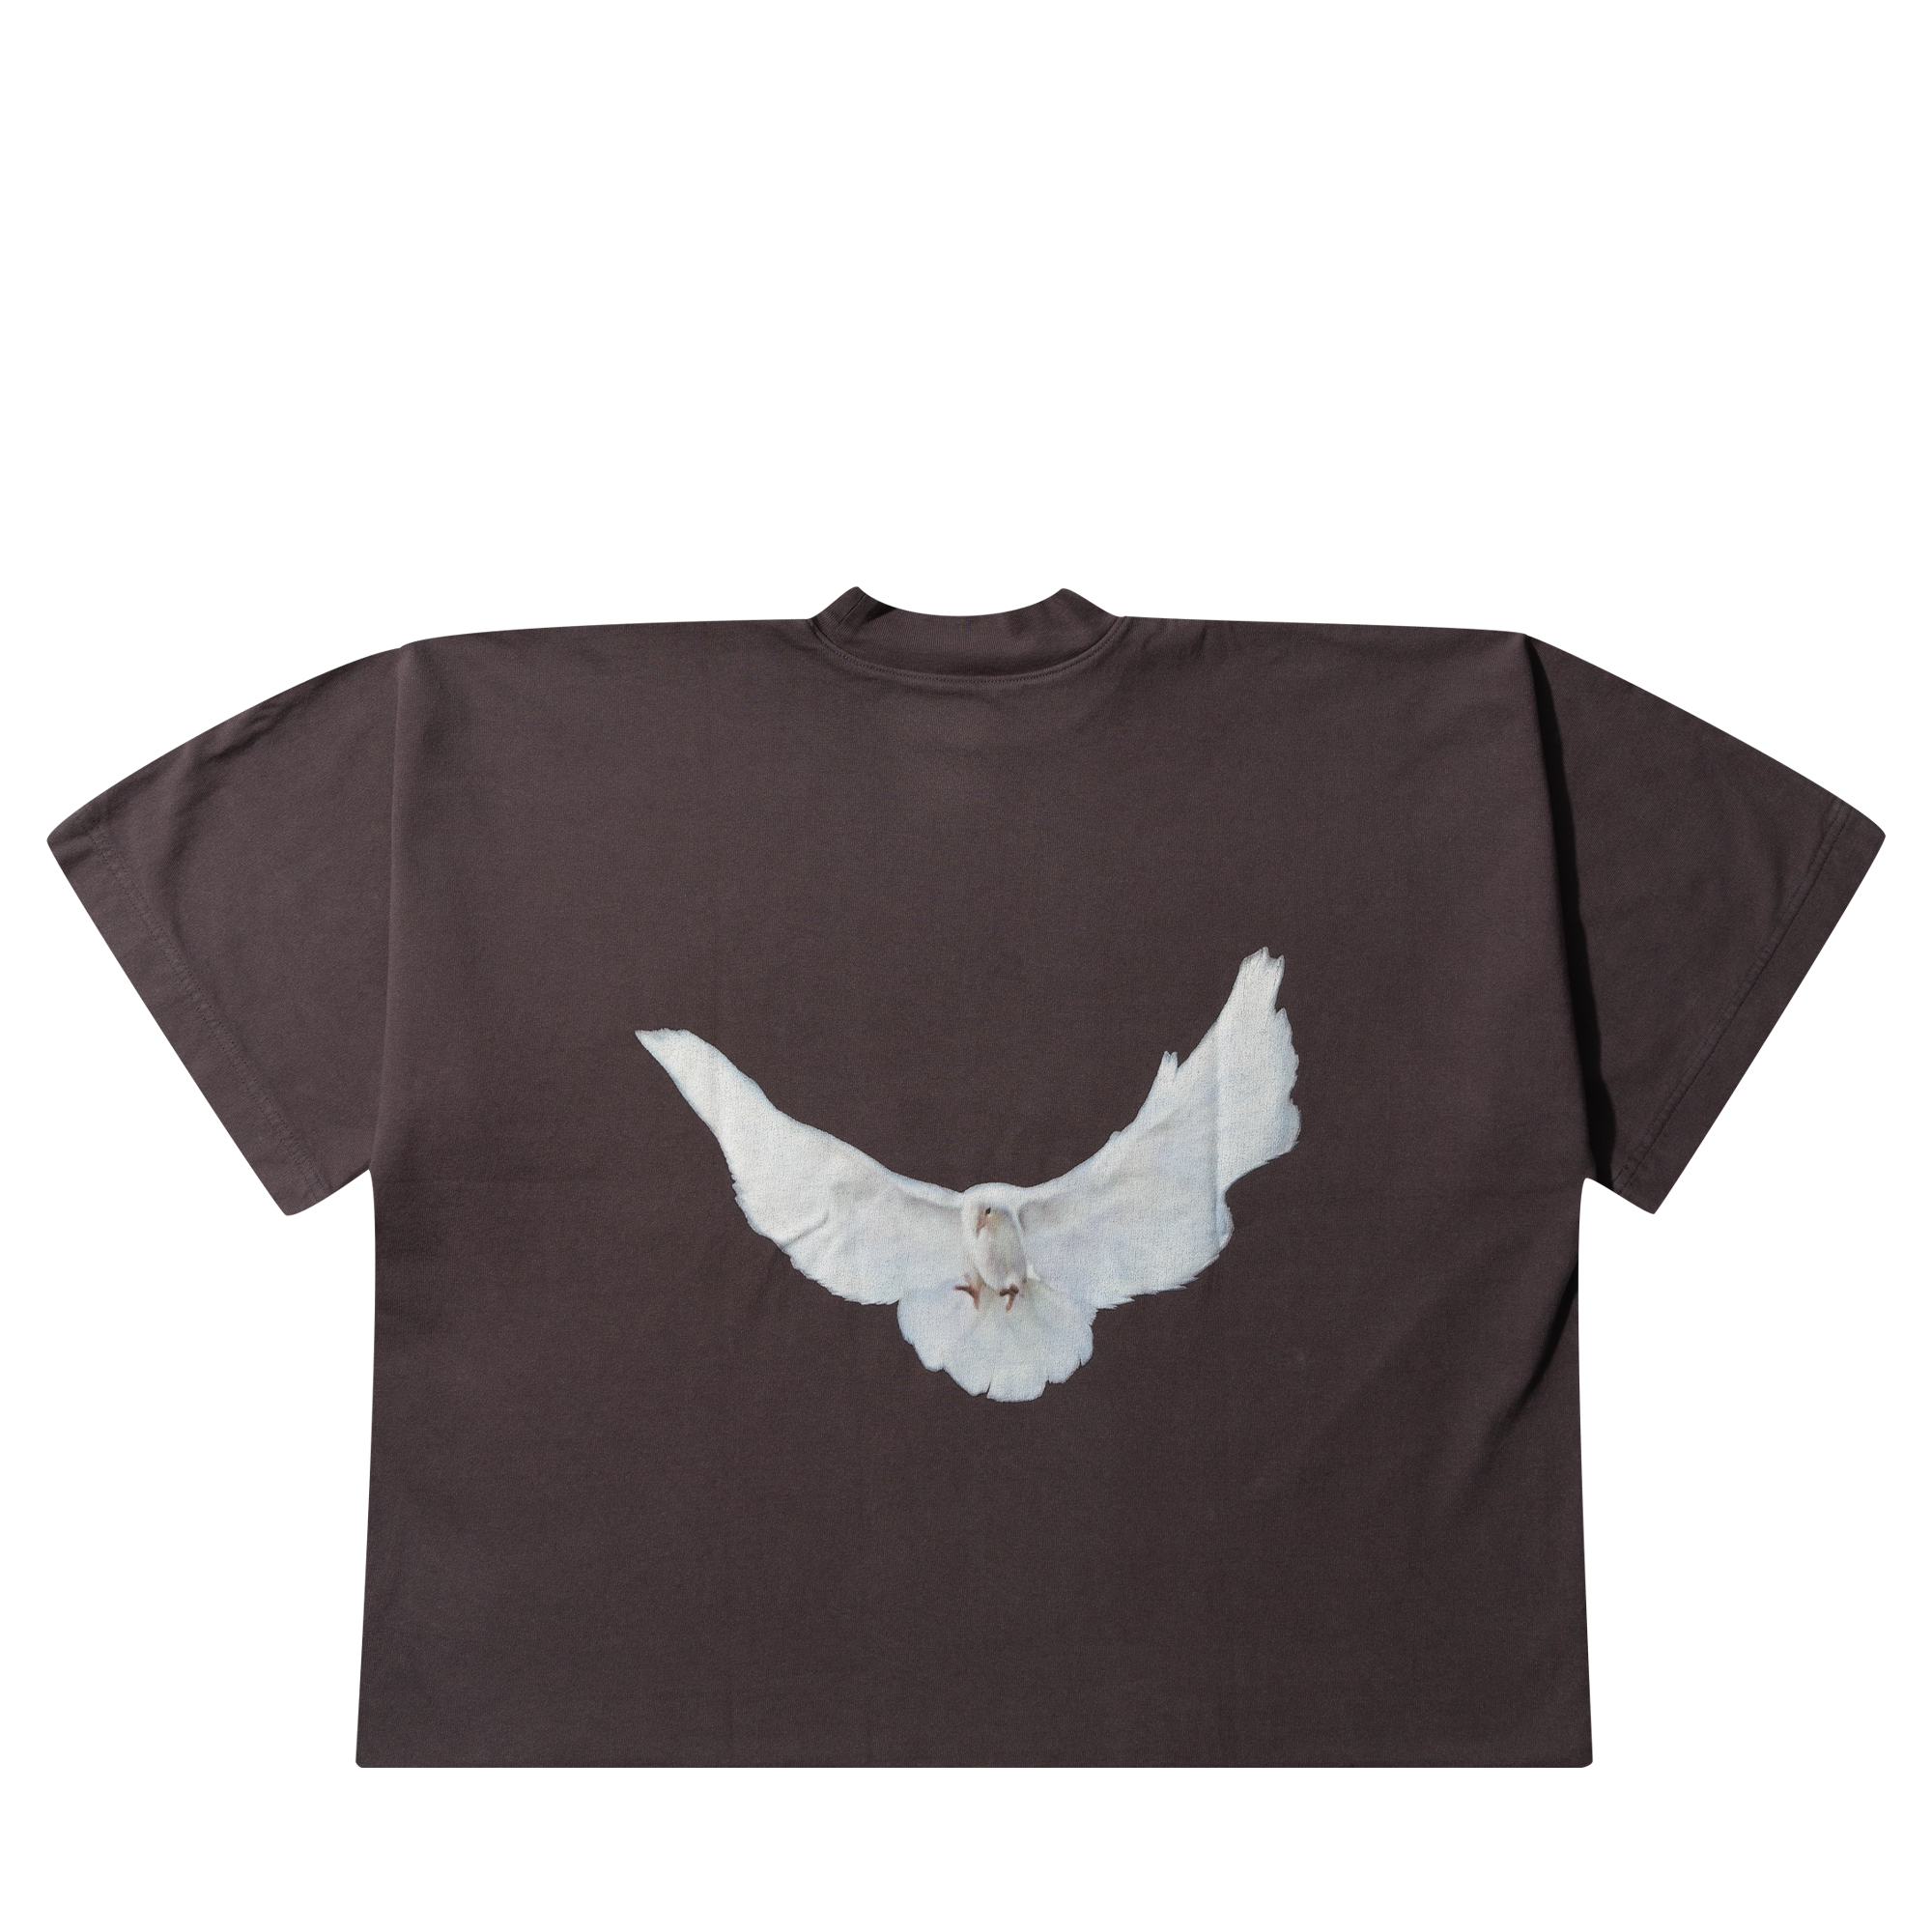 New Yeezy Gap Balenciaga t-shirt dove no seam tee dark grey